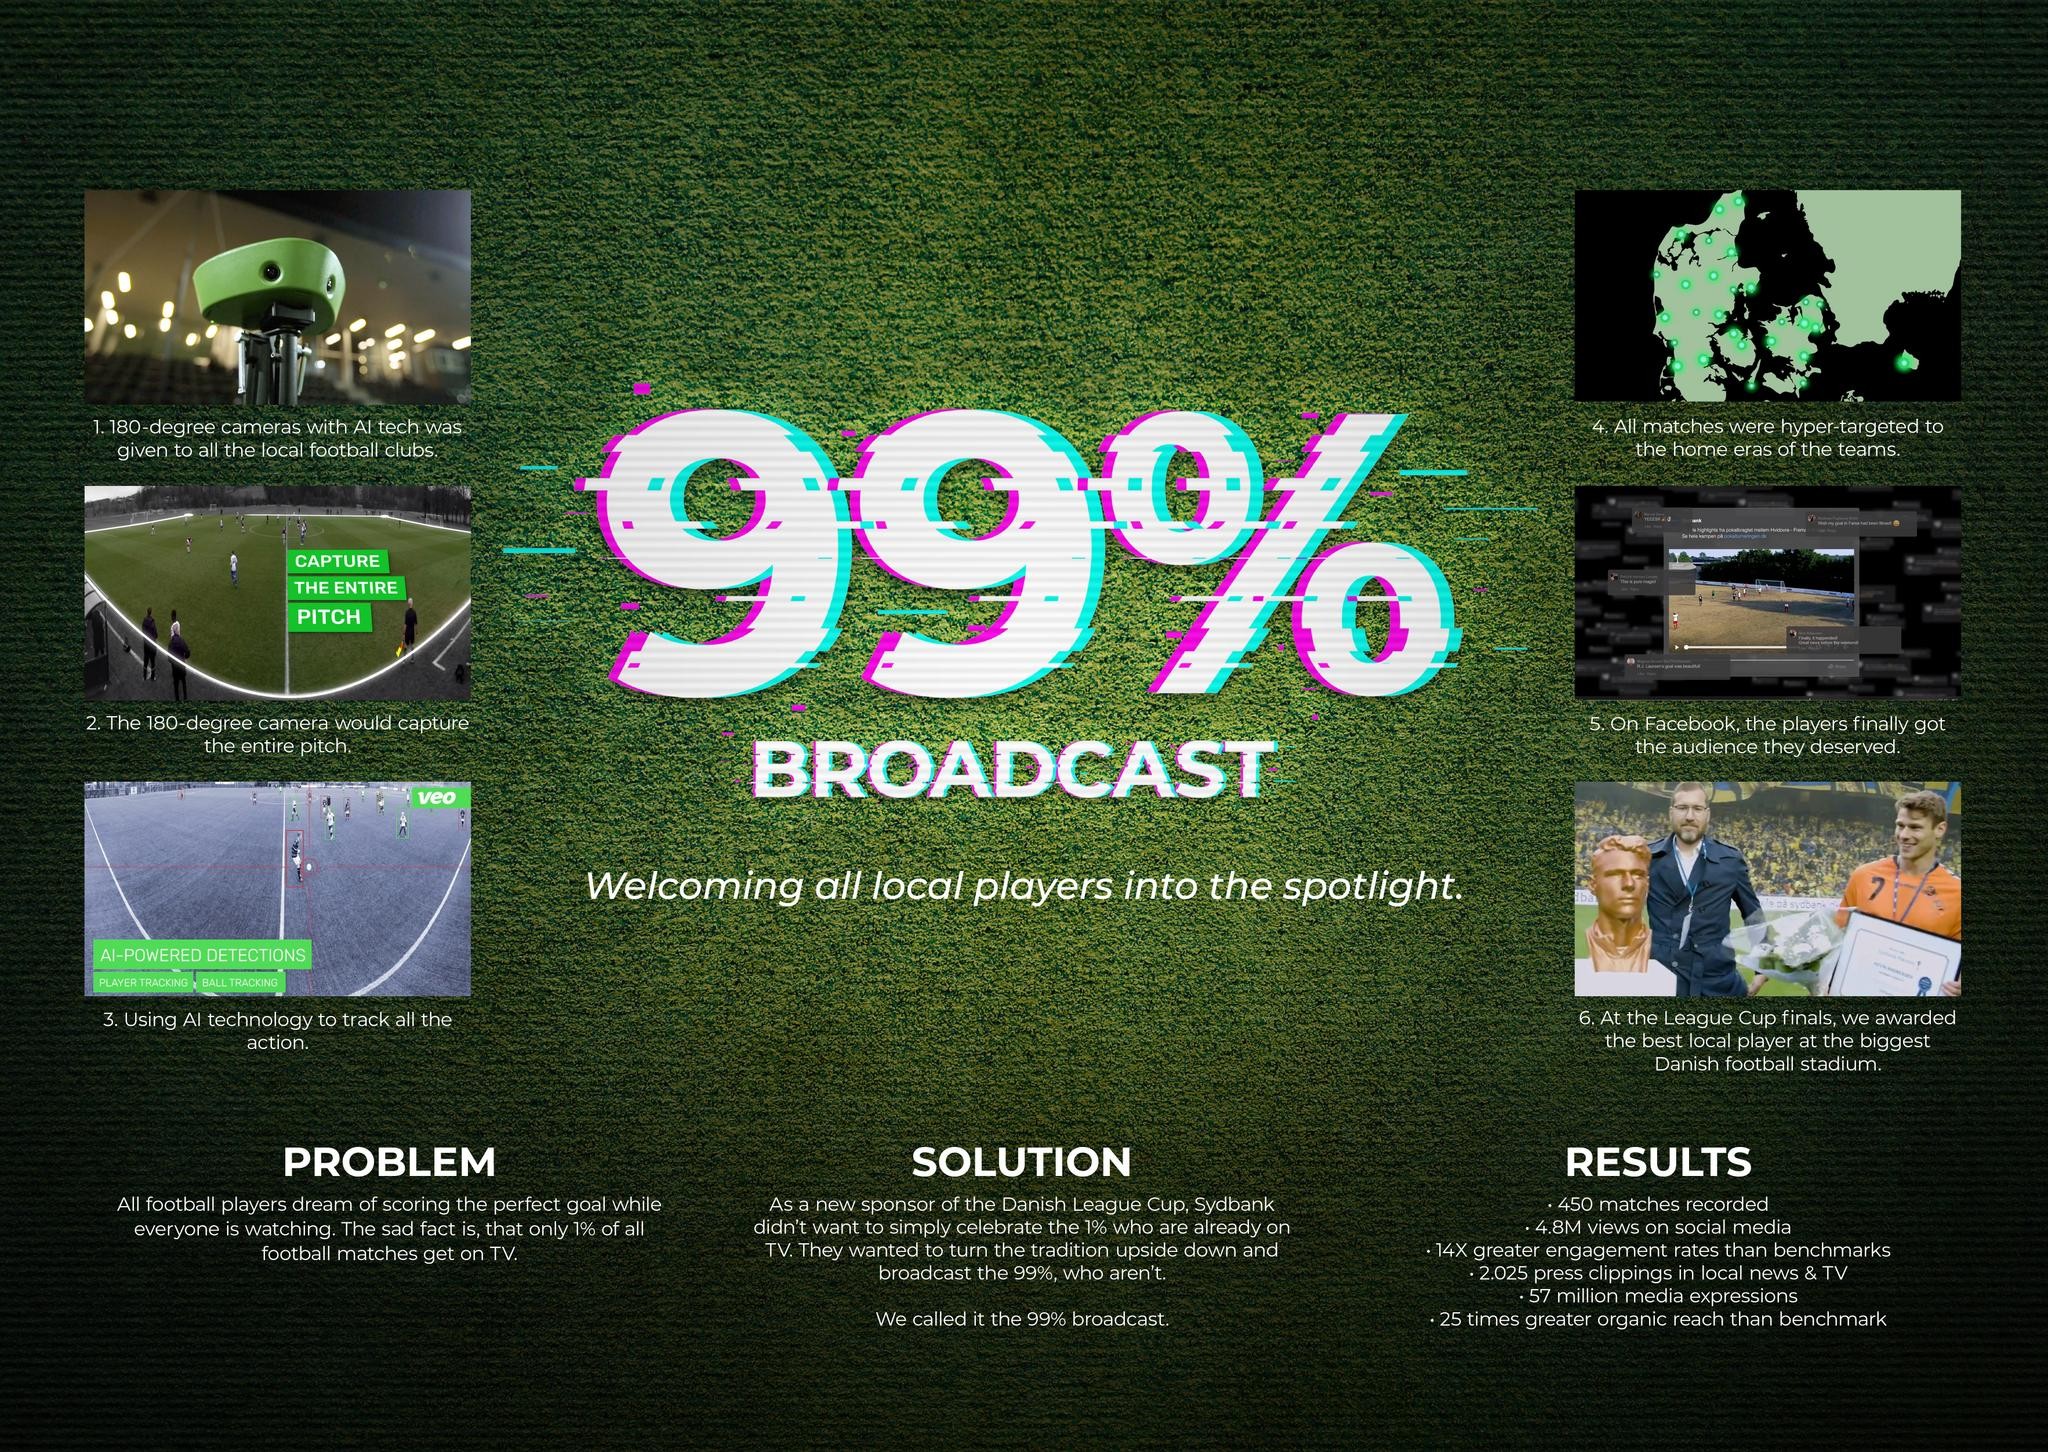 The 99% Broadcast